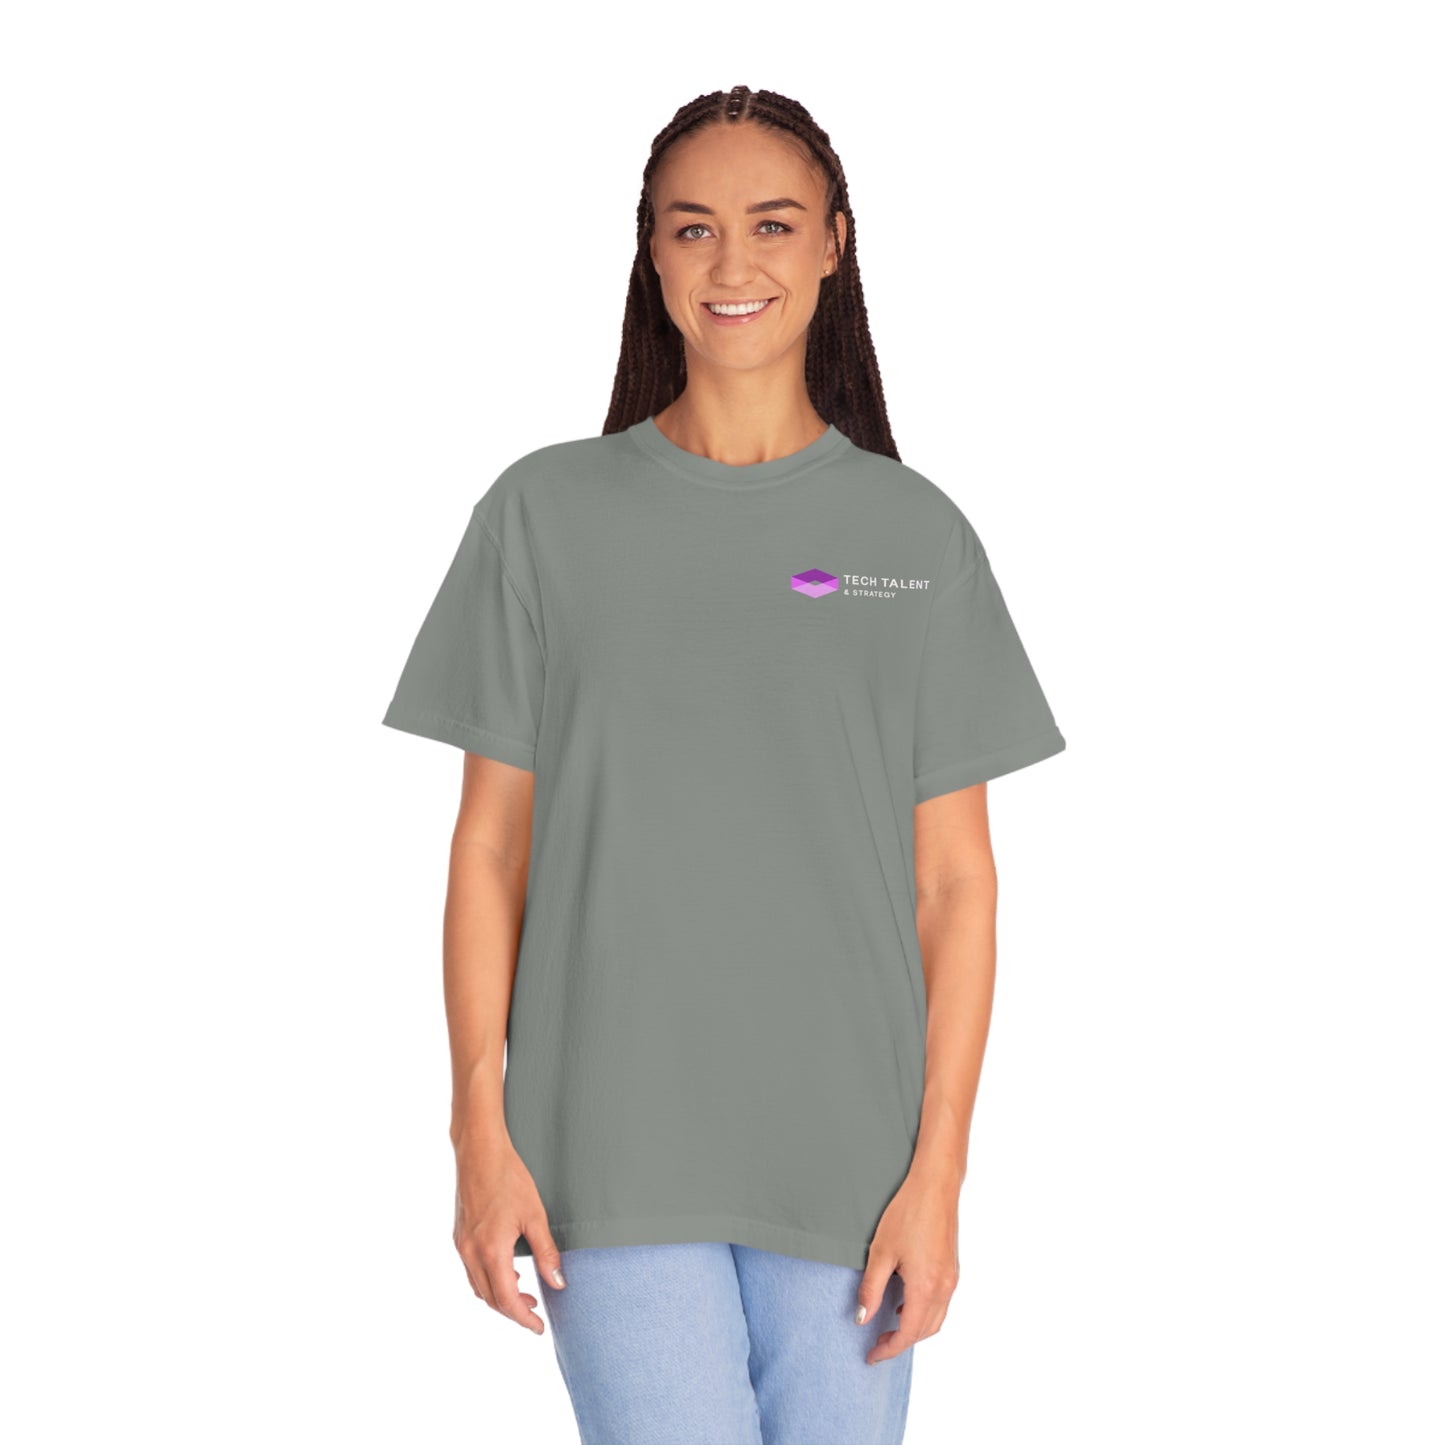 Unisex Purple Logo Garment-Dyed T-shirt